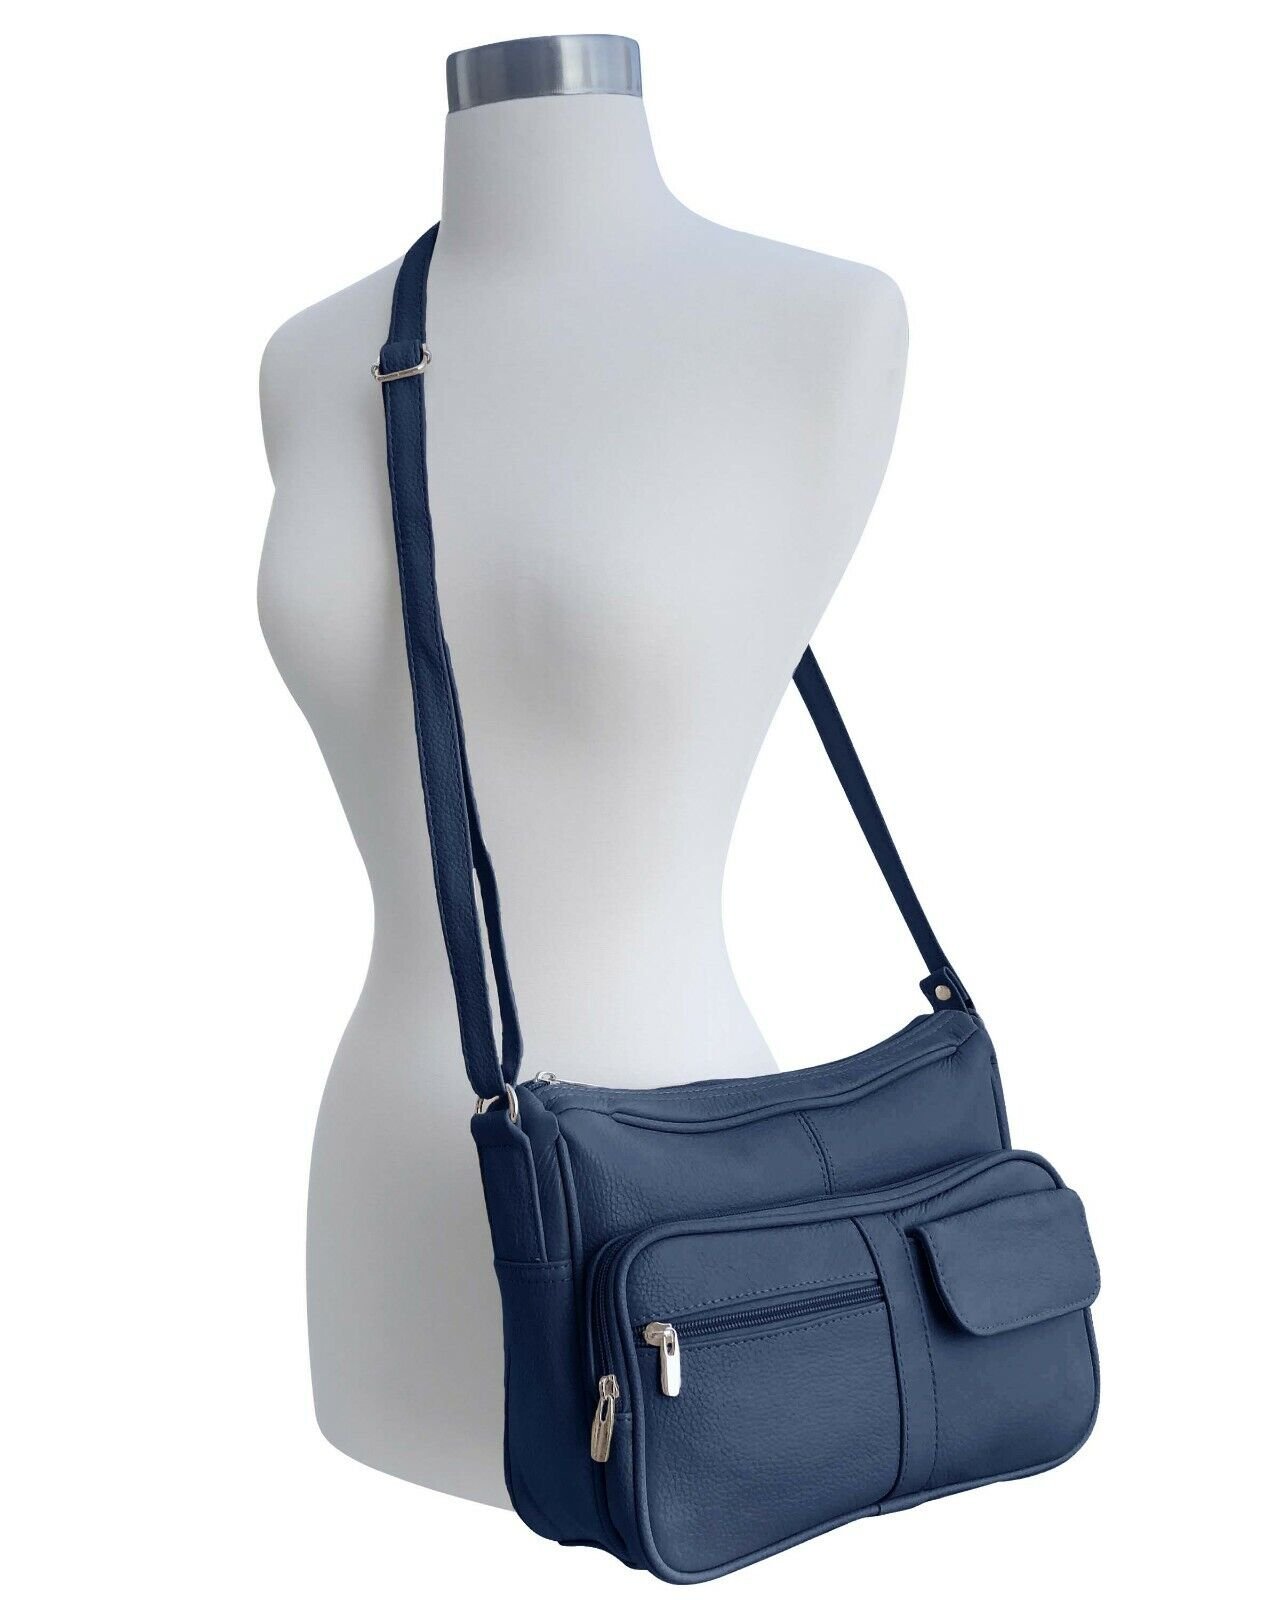 Rosetti Handbags in Handbags | Black - Walmart.com